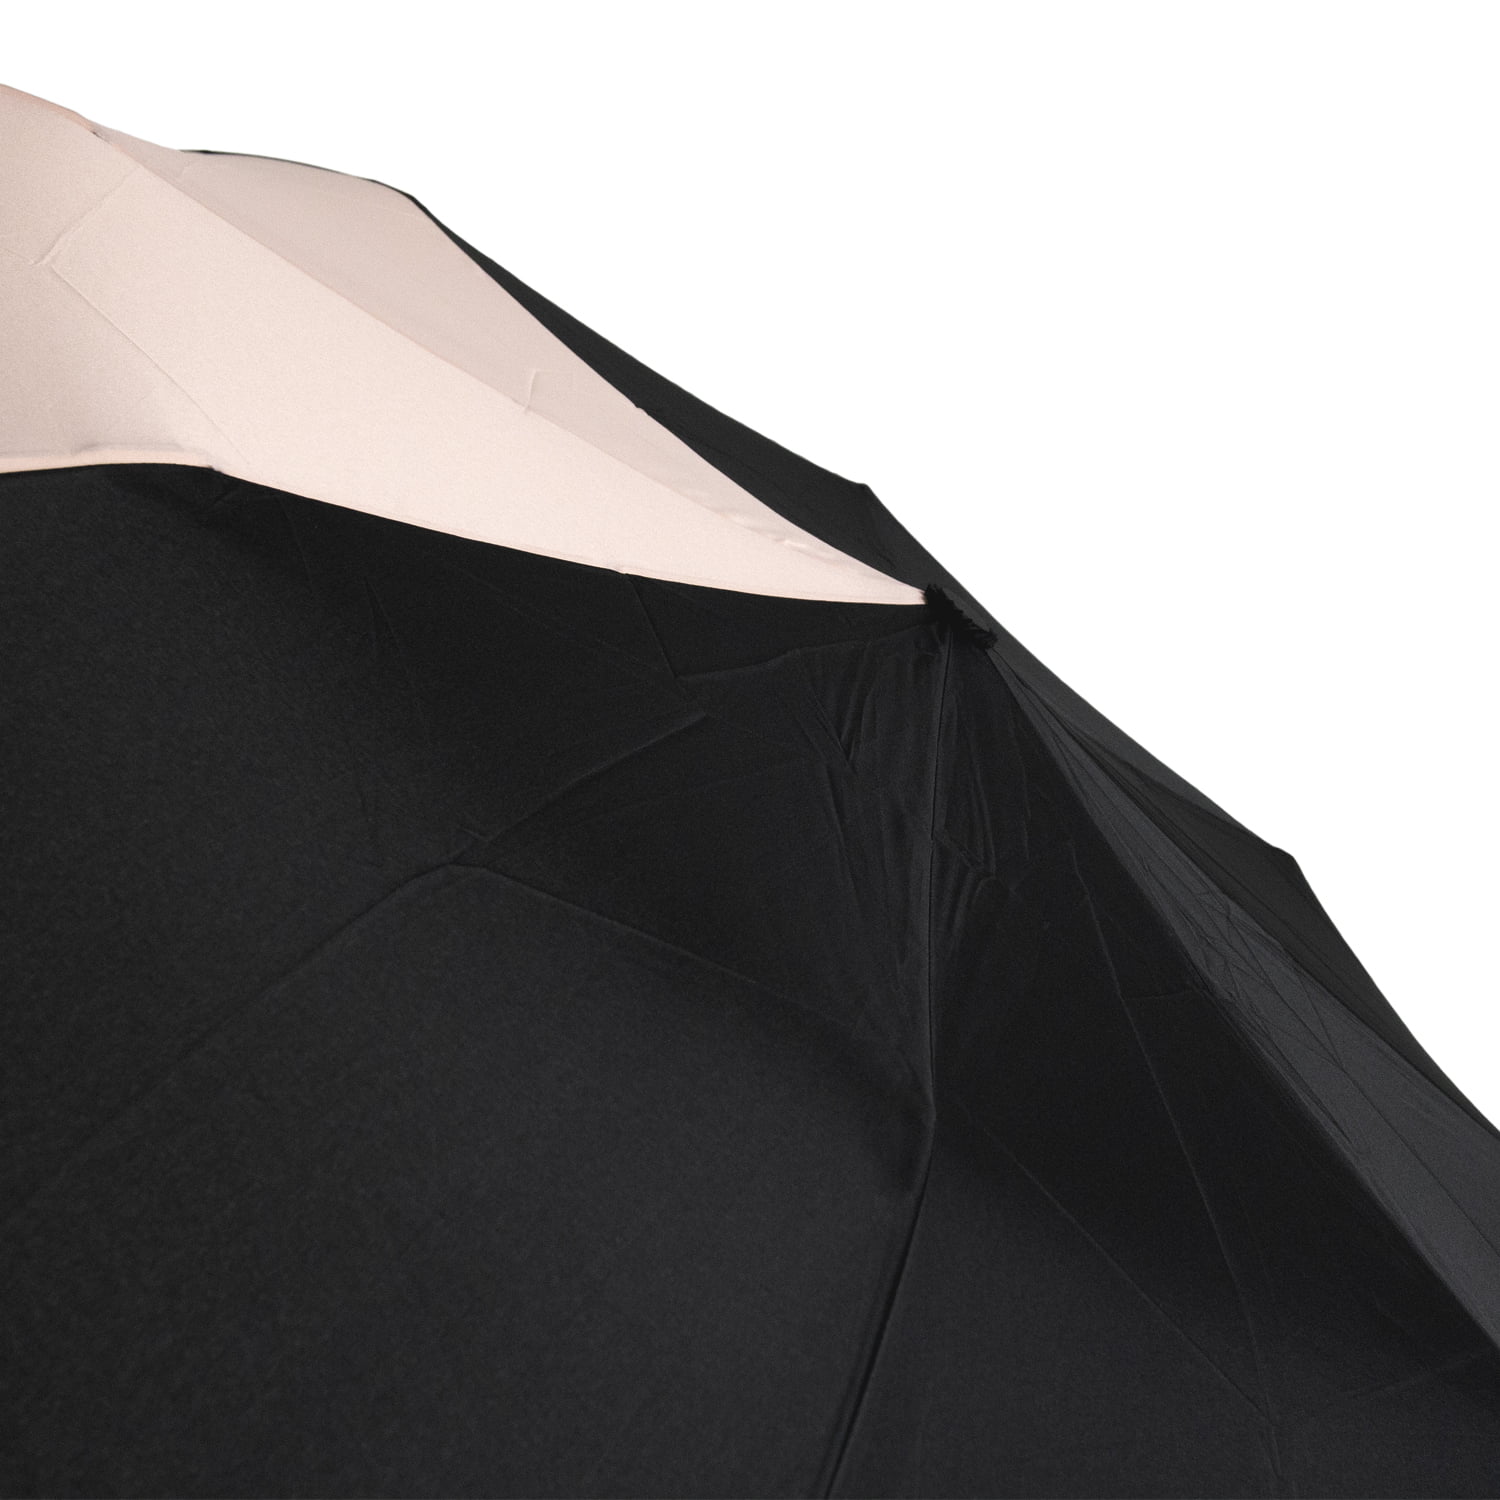 canopy of black and pink Ezpeleta 2 Color Automatic Folding Golf Umbrella XXL